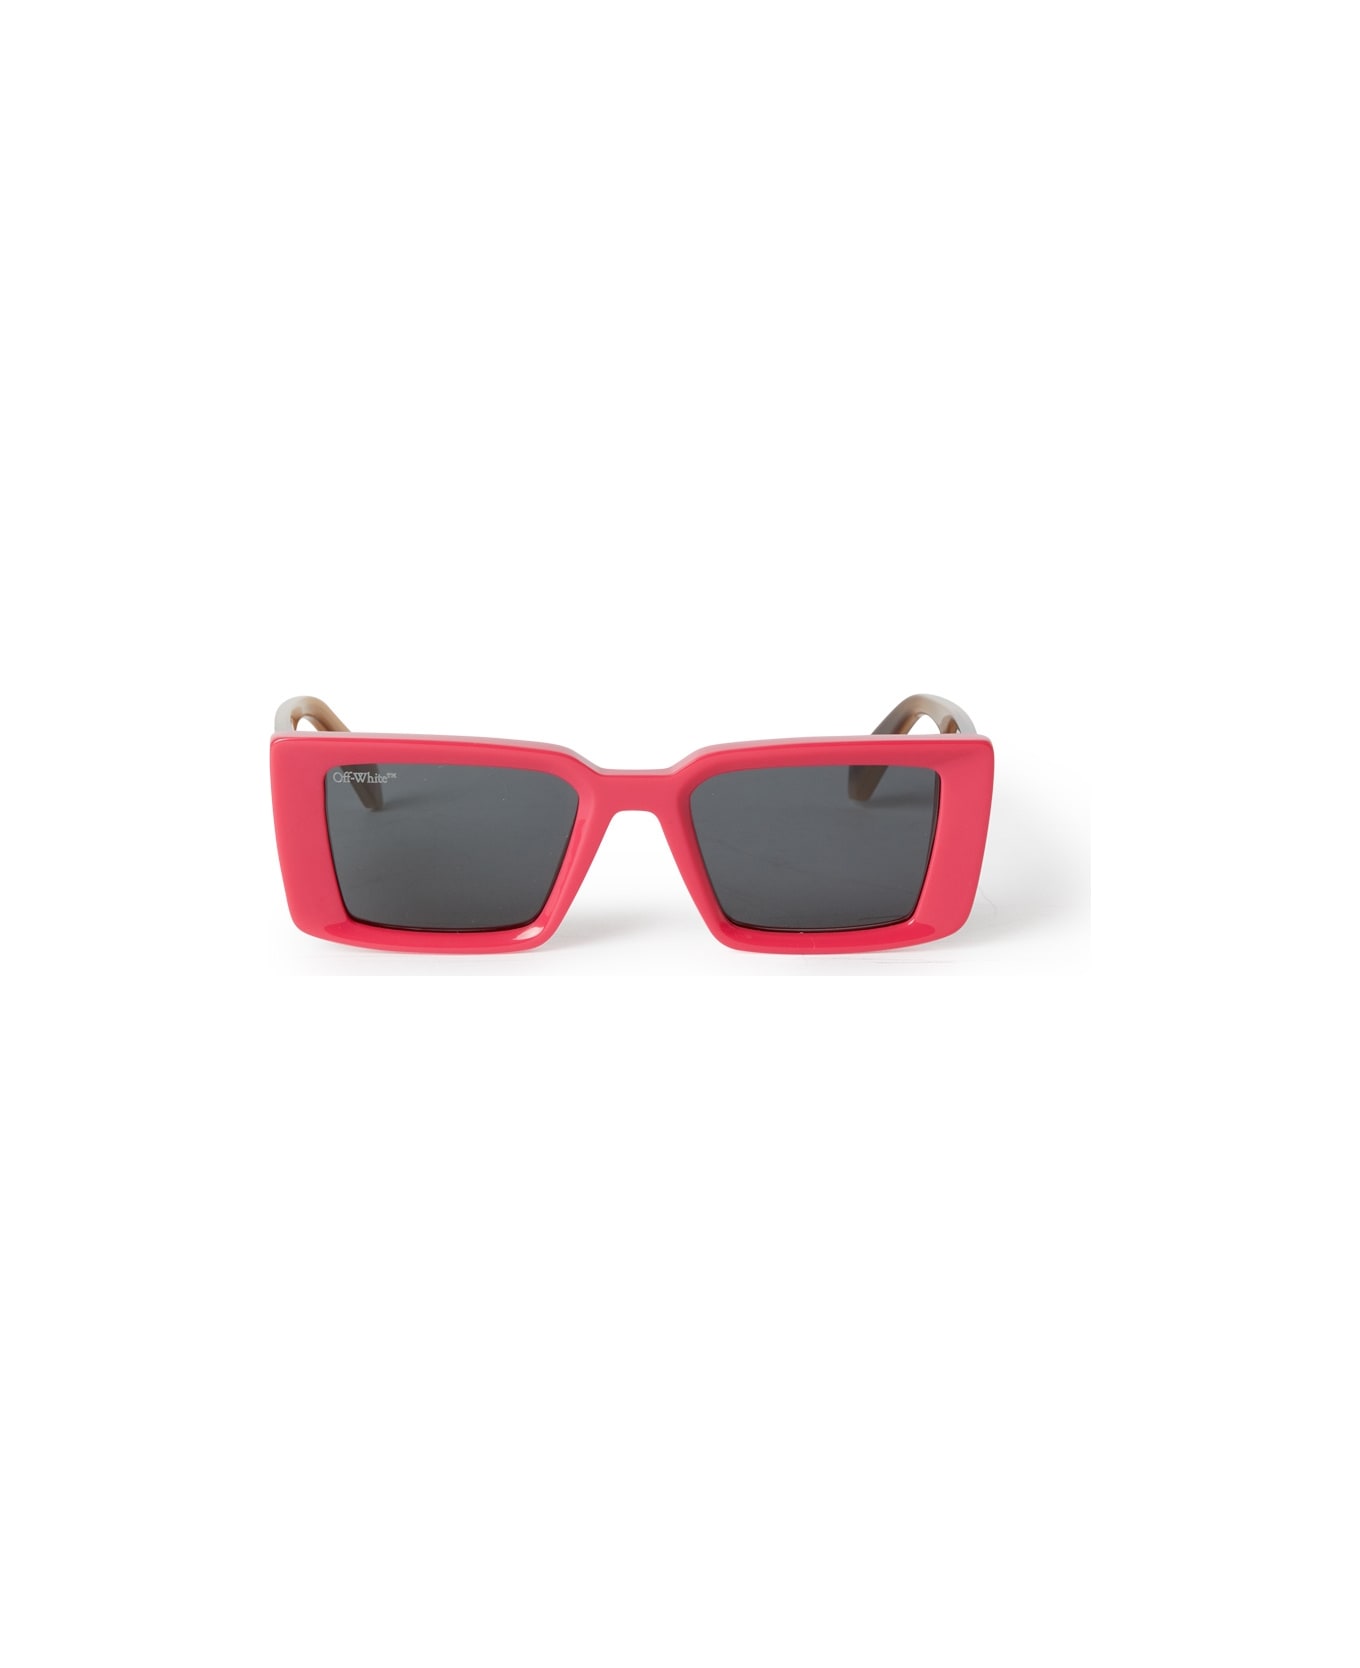 Off-White SAVANNAH SUNGLASSES Sunglasses - Cherry サングラス